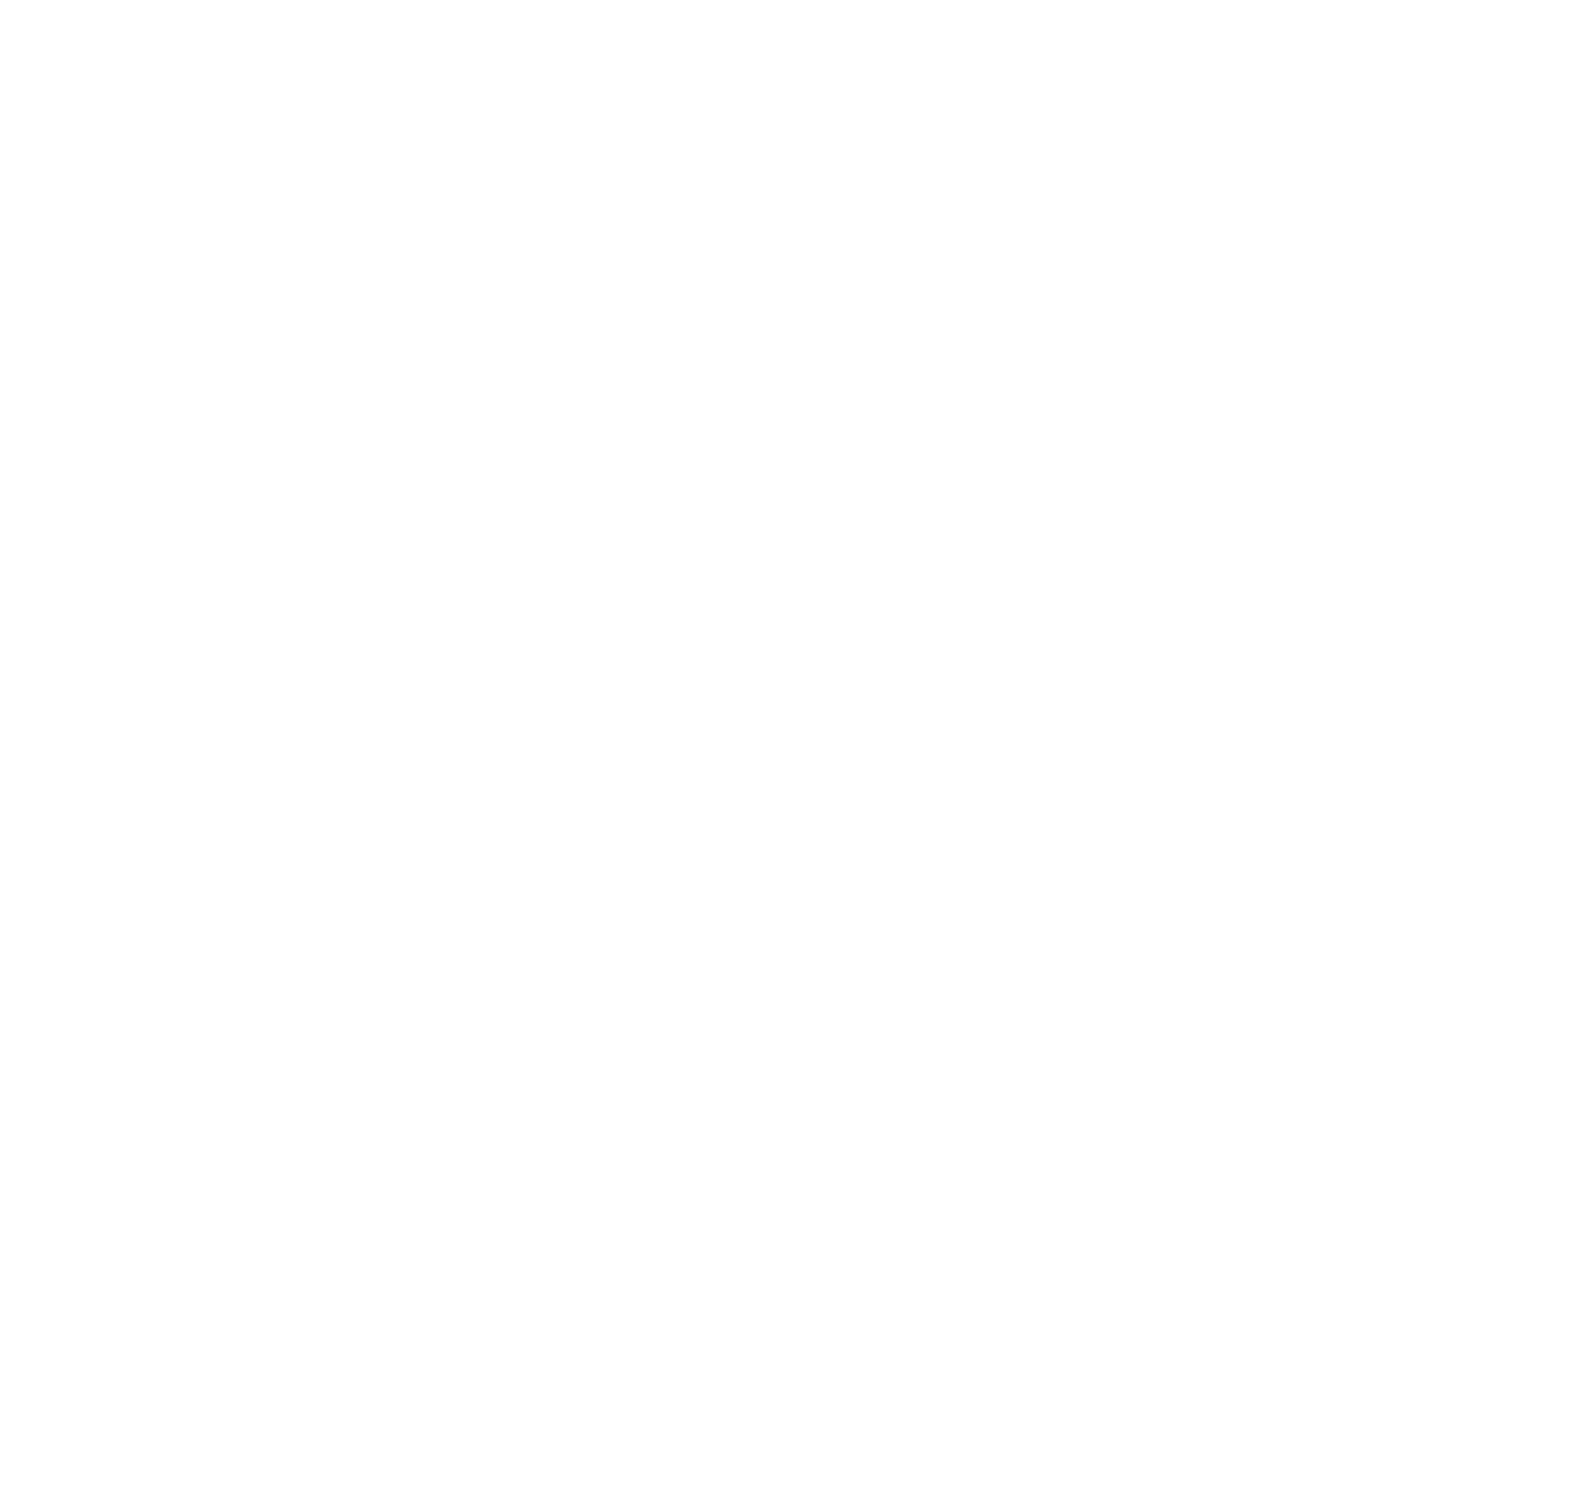 Embecta logo pour fonds sombres (PNG transparent)